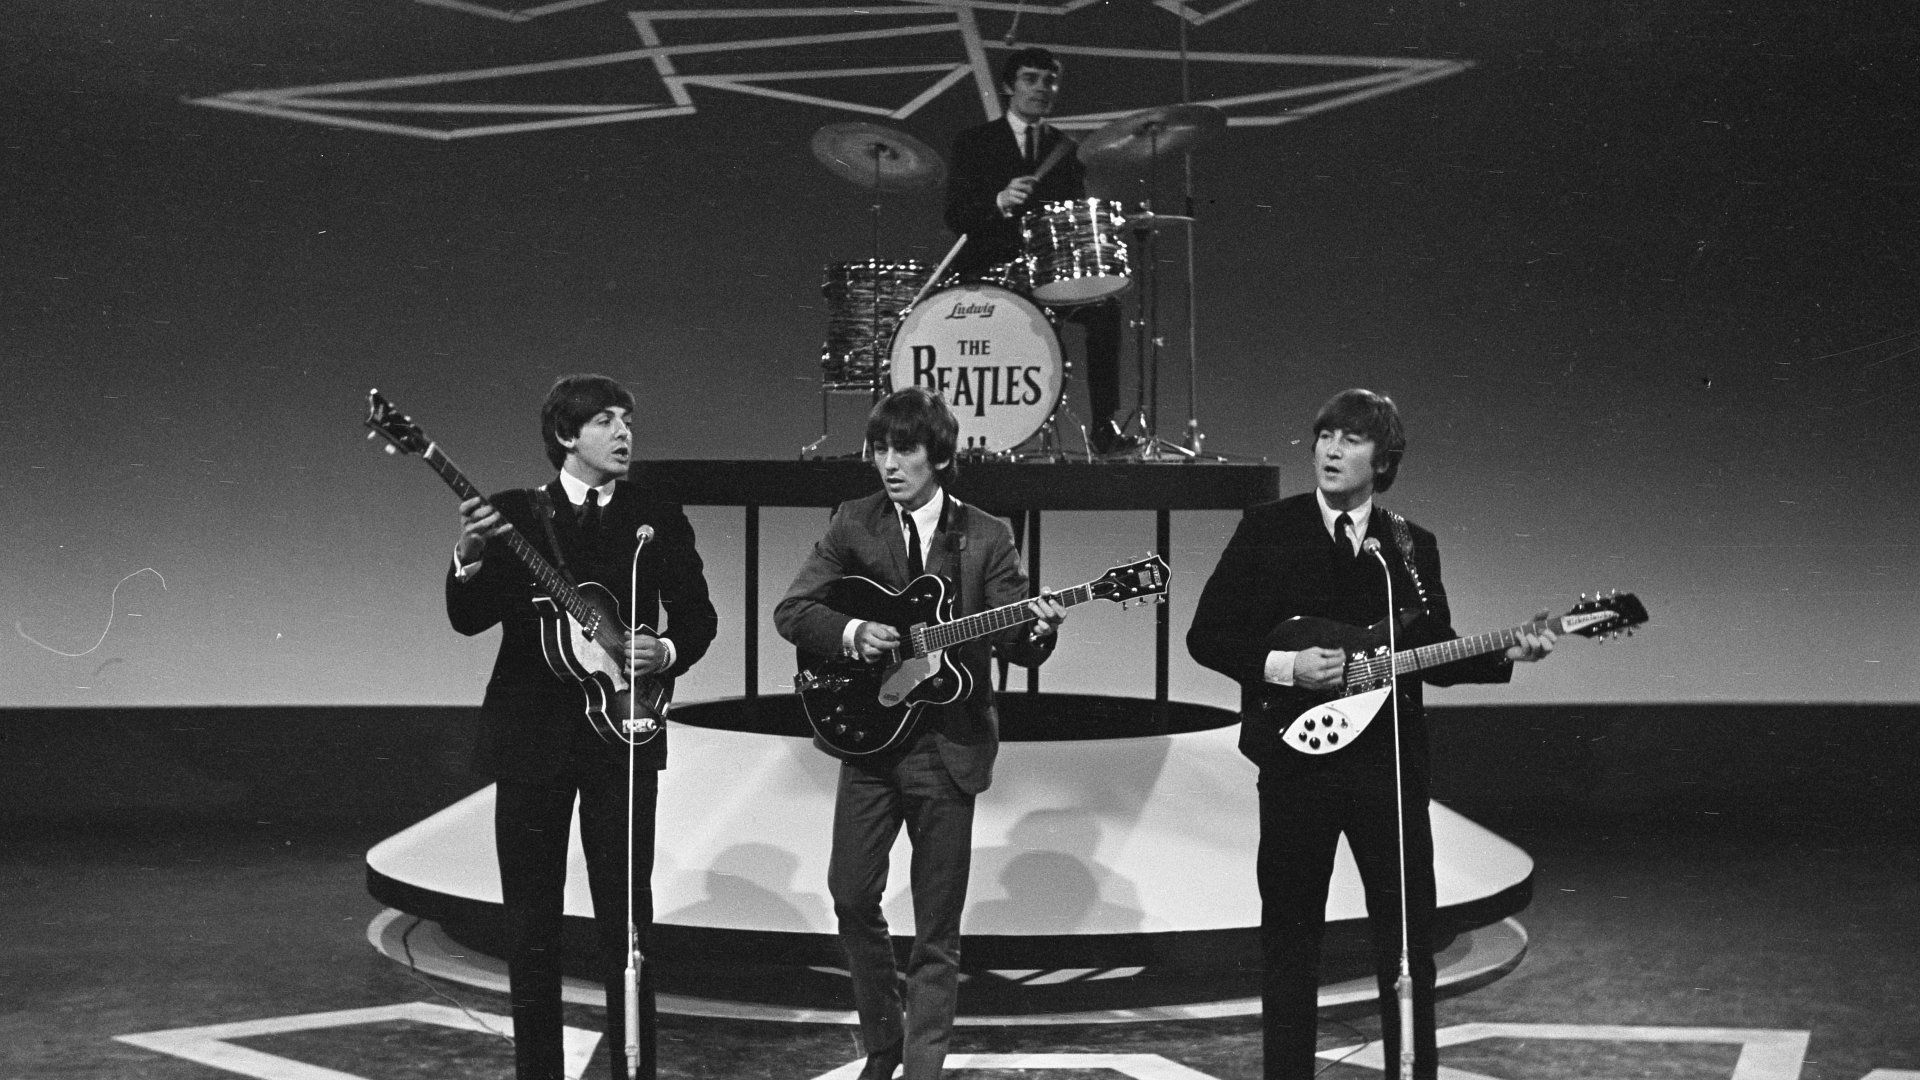 The Beatles publica hoy nueva canción con IA: todo lo que se sabe de "Now and Then"